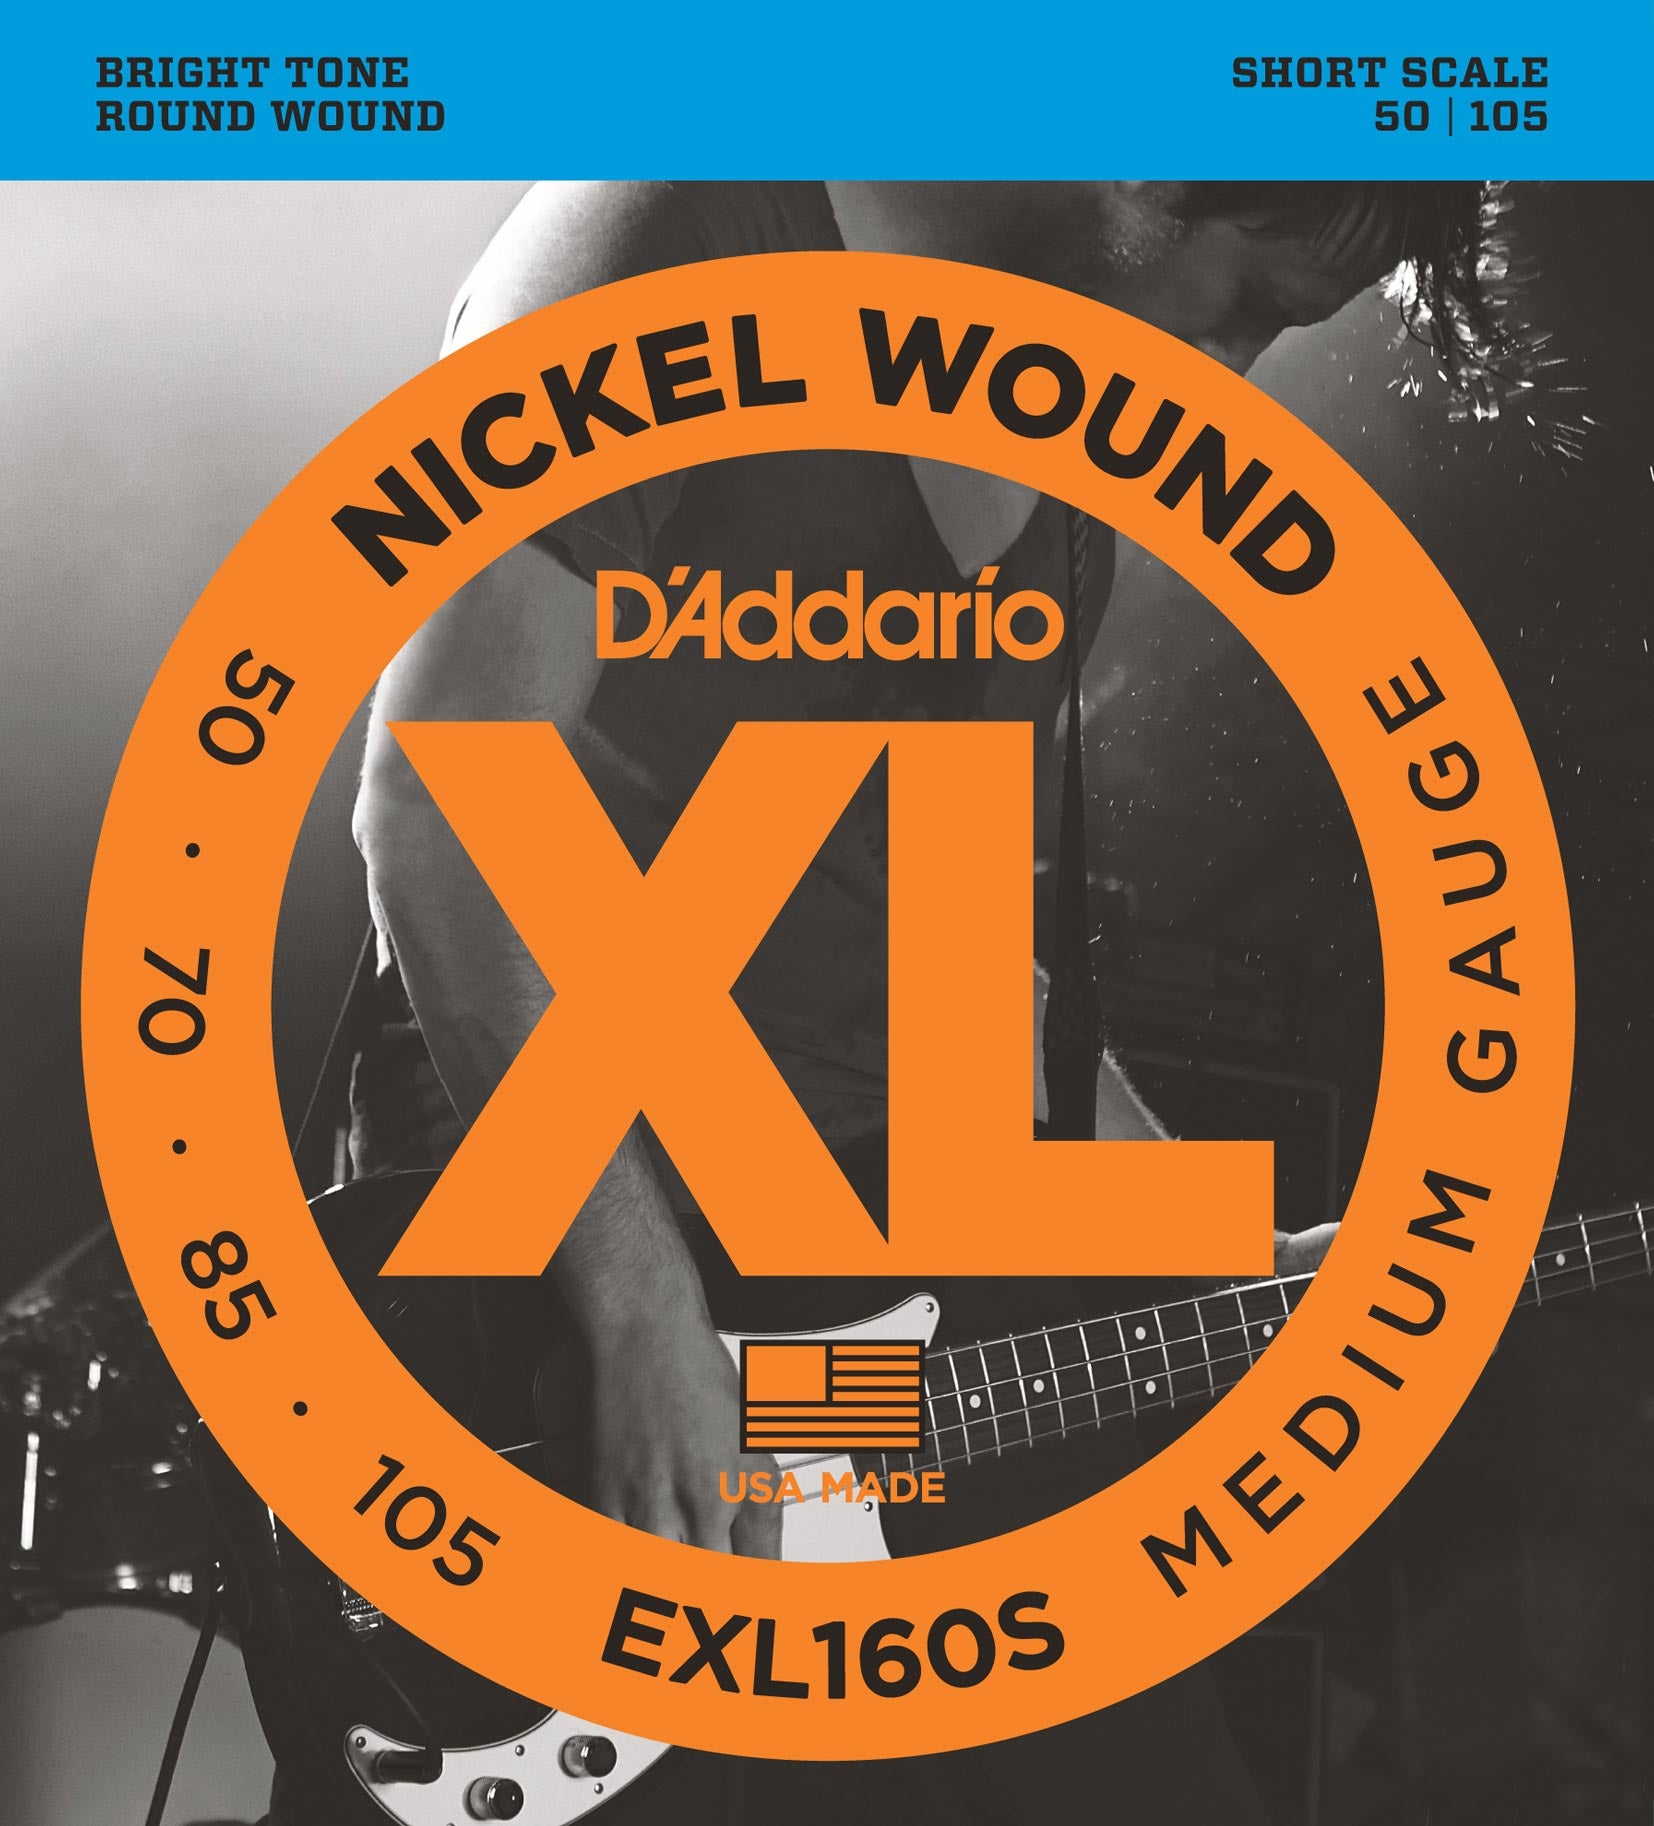 D'ADDARIO EXL160S NICKEL WOUND BASS STRINGS 50-105 SHORT SCALE